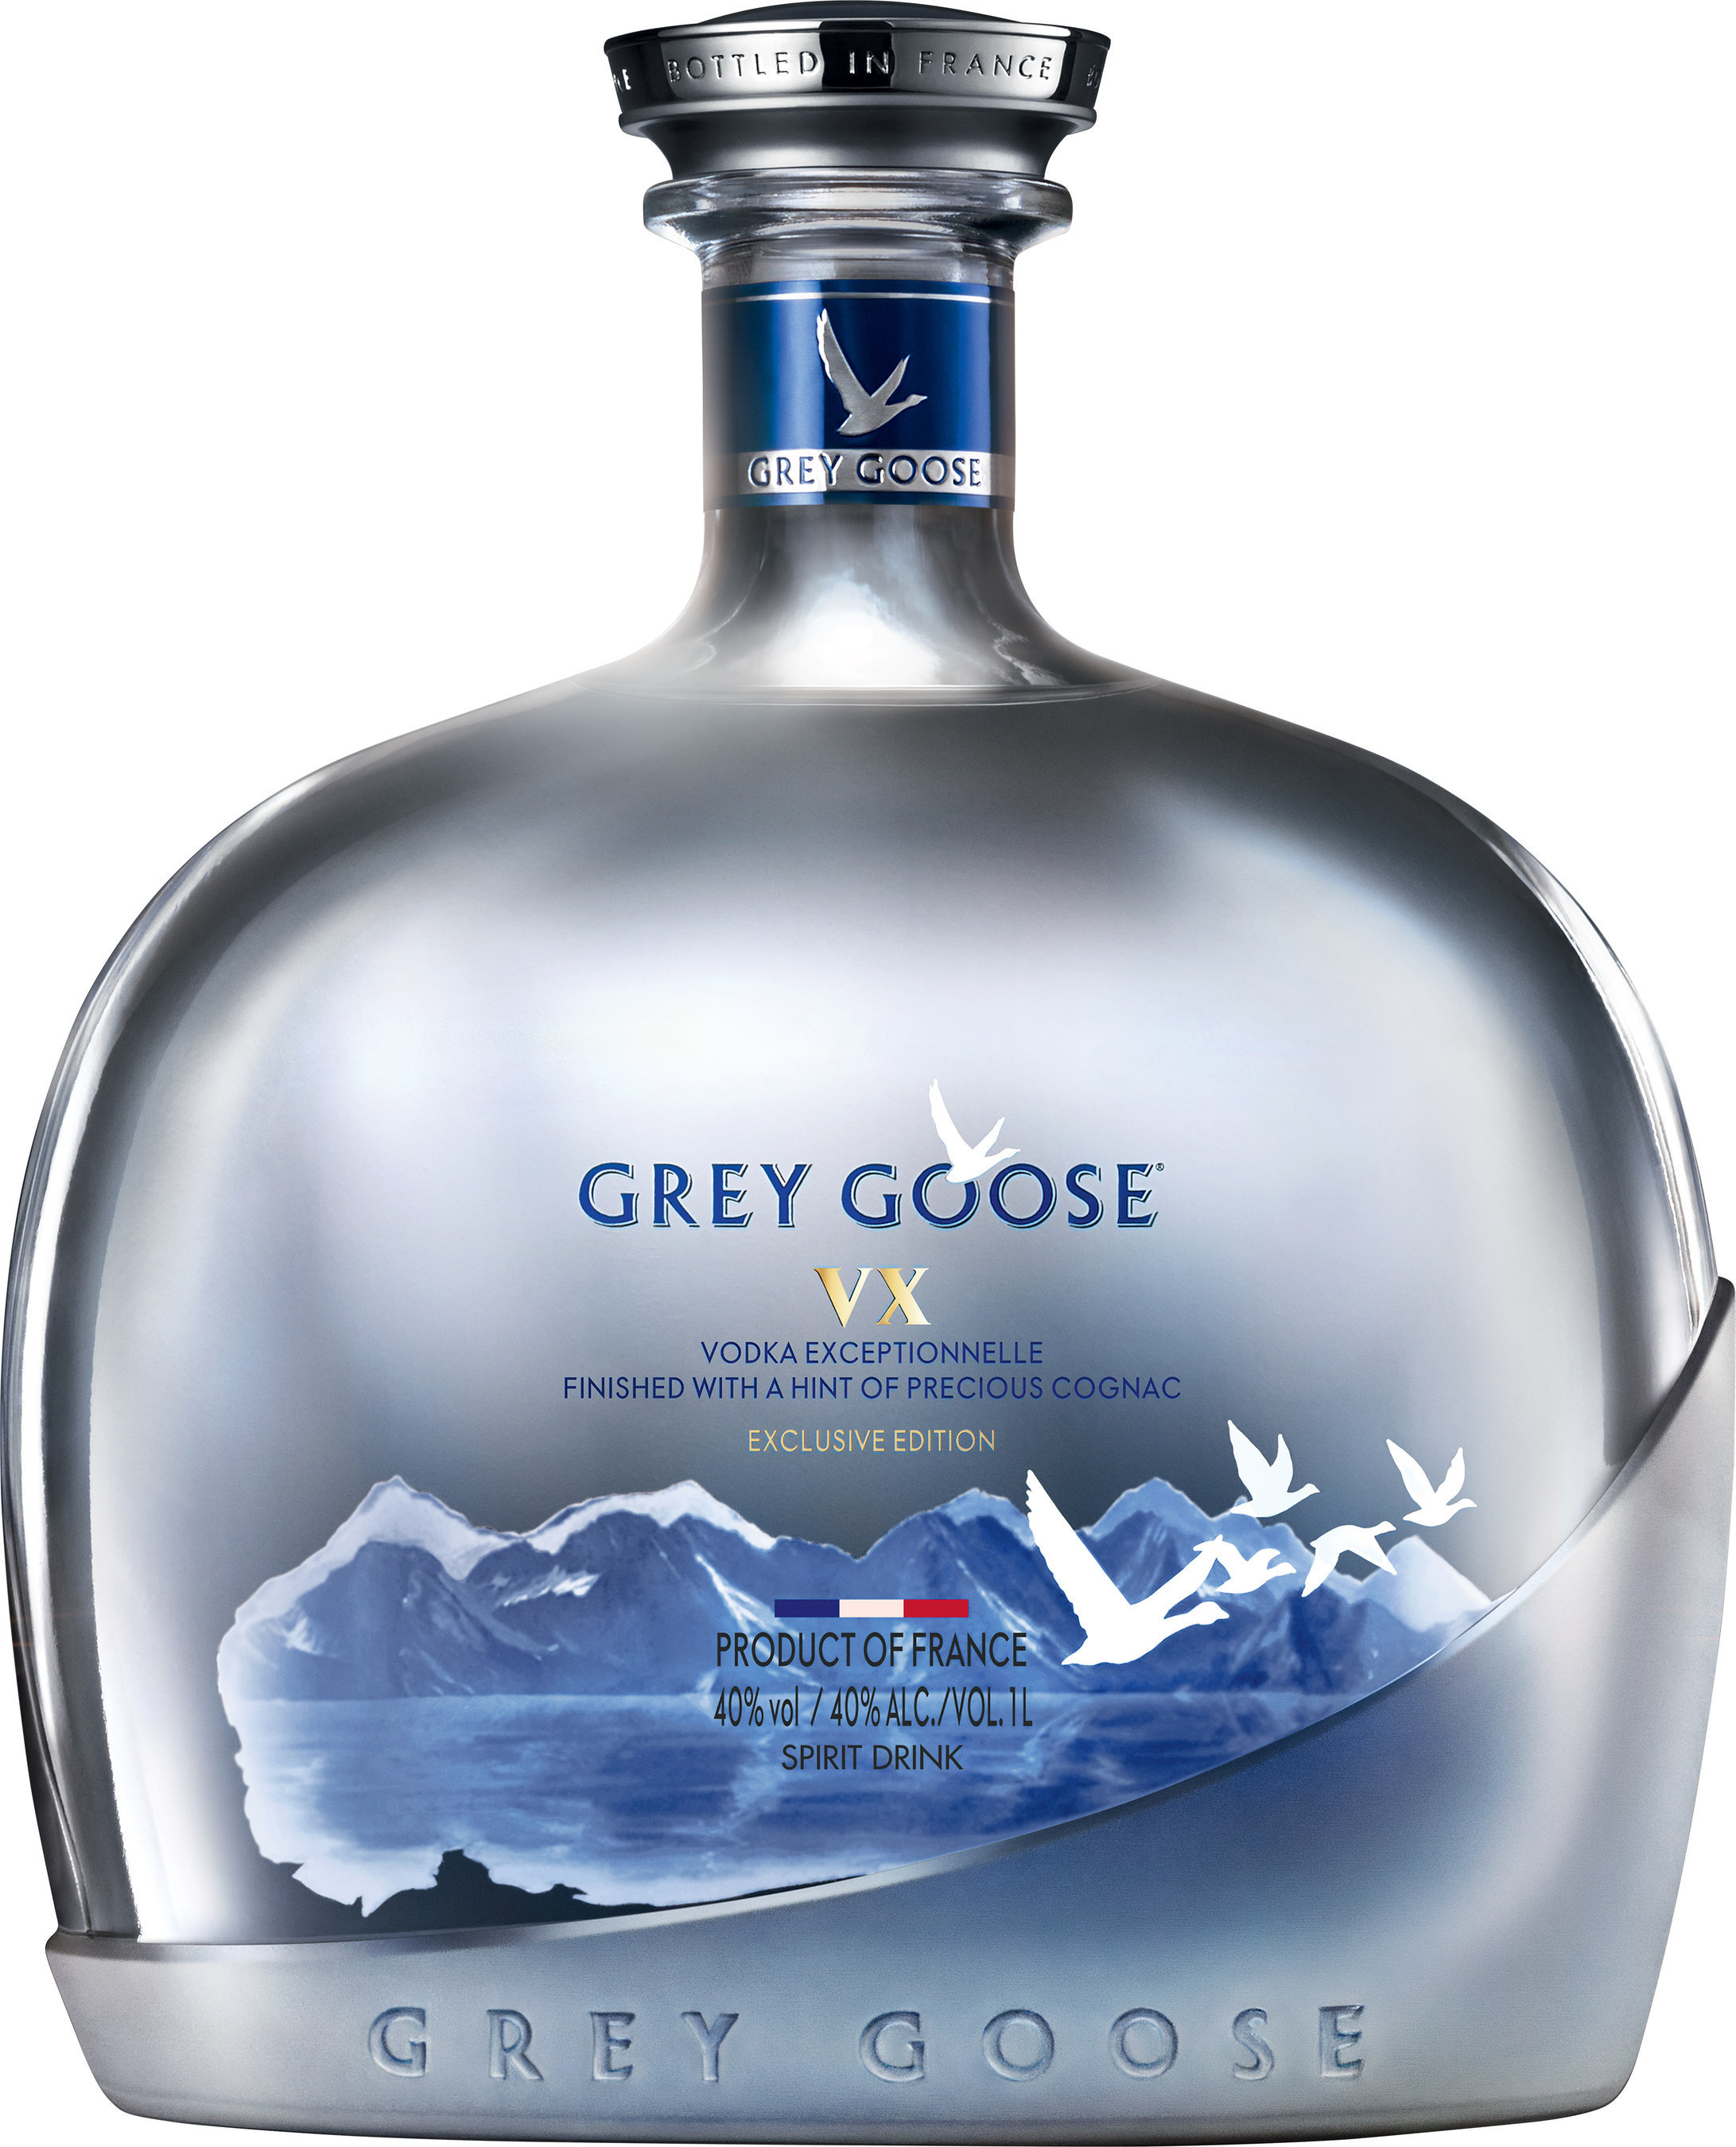 GREY GOOSE® Vodka Presents GREY GOOSE® VX, A Pioneering New Spirit